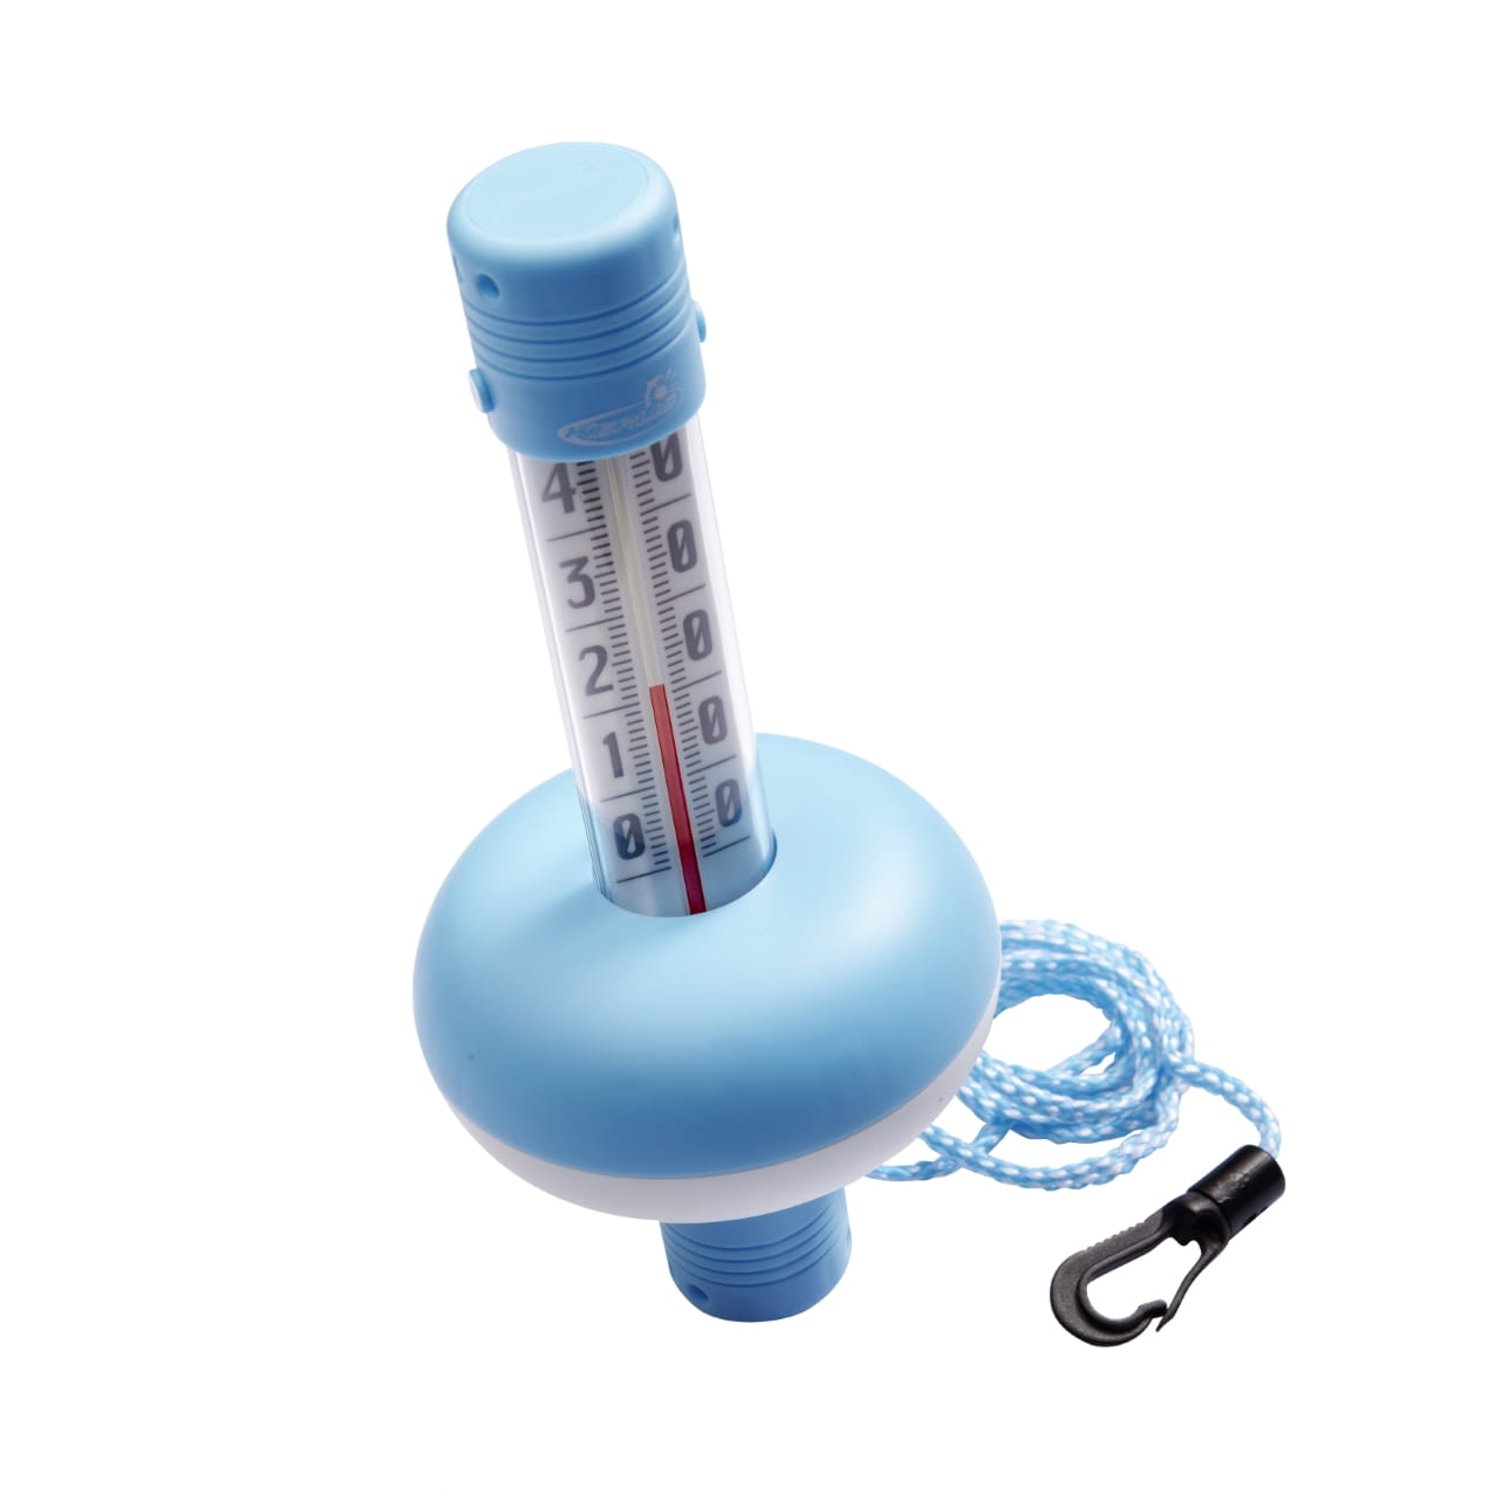 Thermometer mini vision colored - Blue - Kerlis